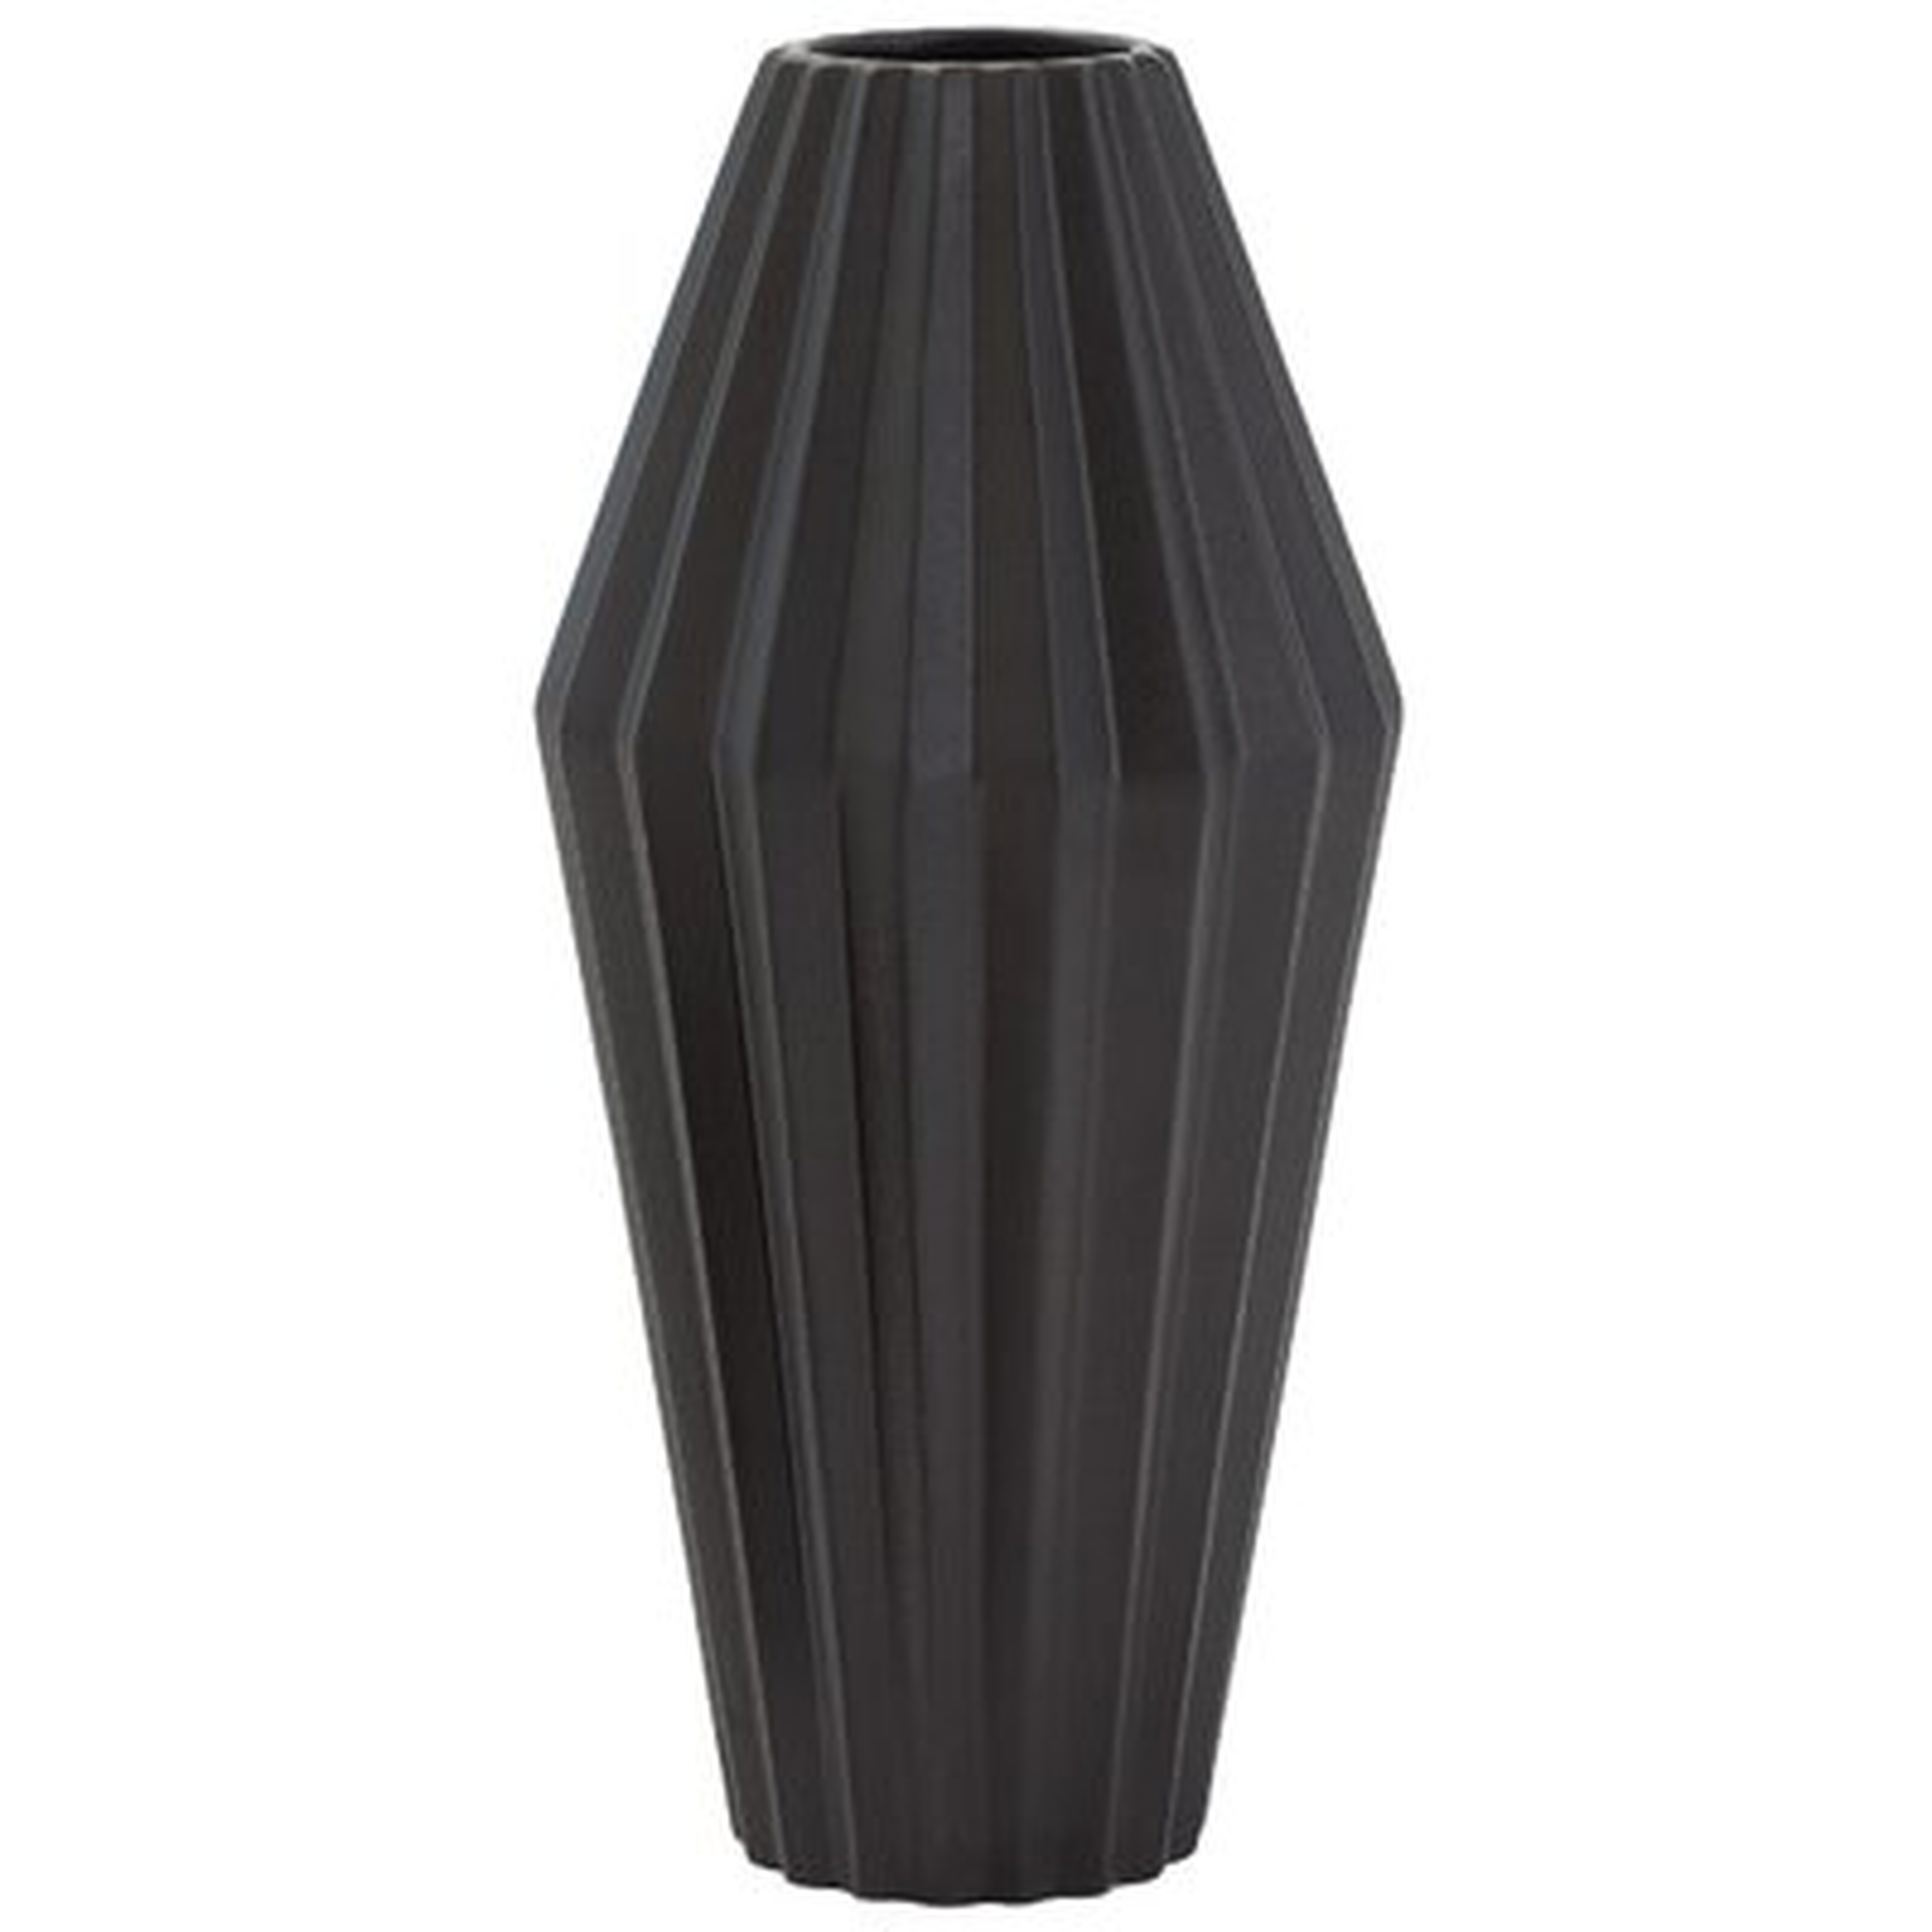 Moana Large Ceramic Vase - Wayfair